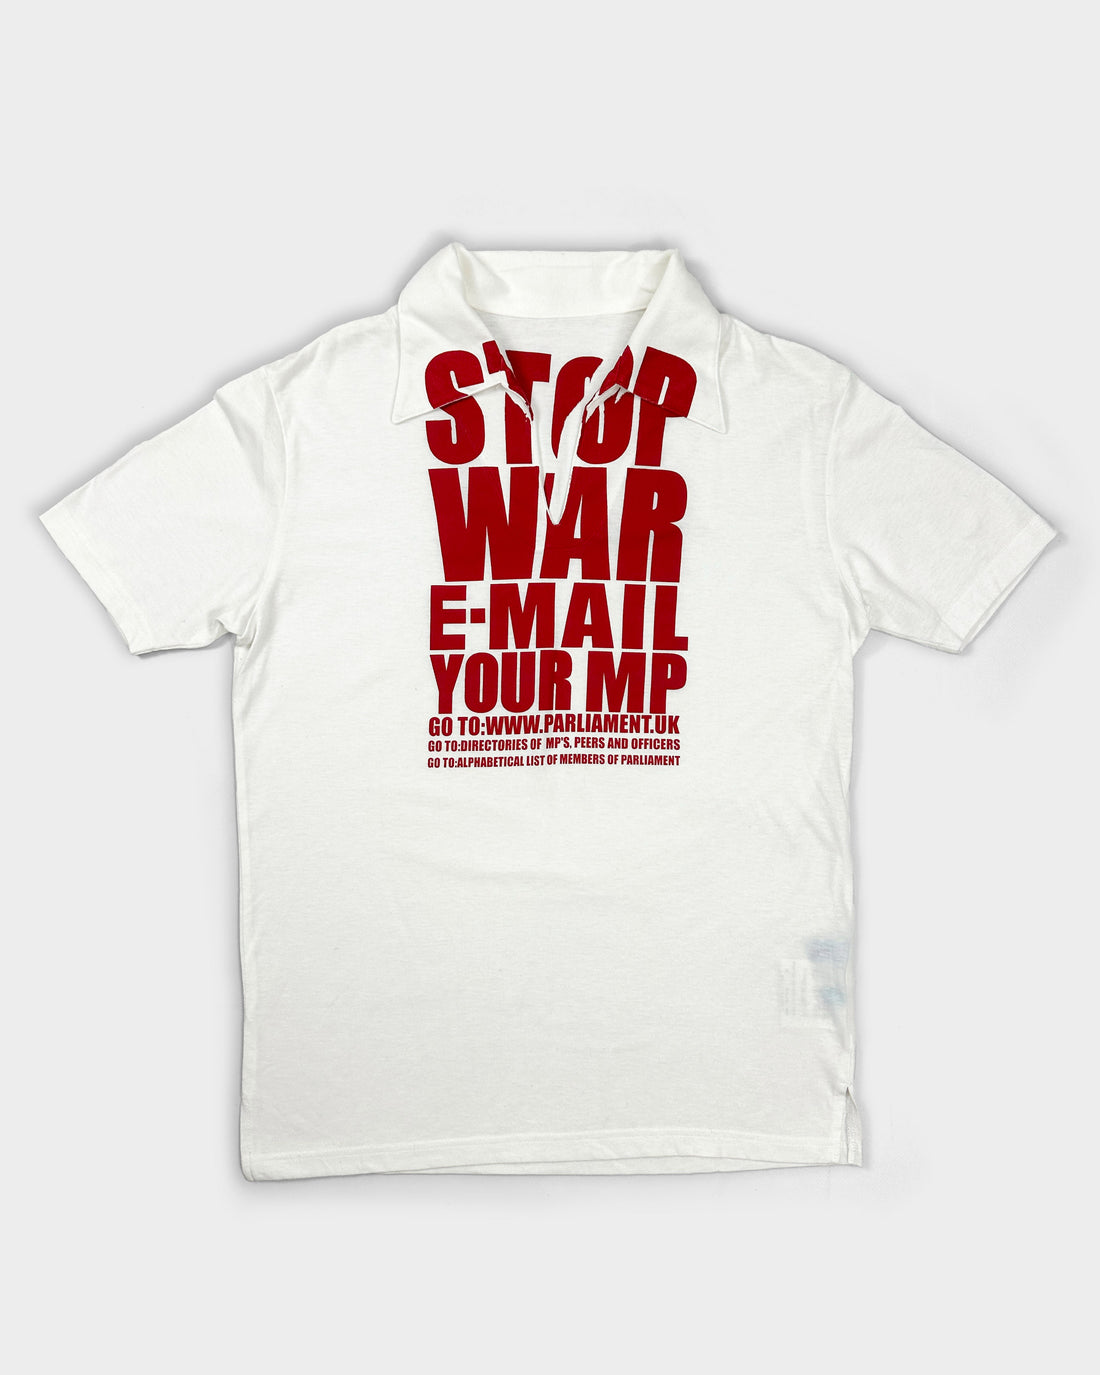 Katharine Hamnett "Stop War" White Printed Polo Tee 2000's